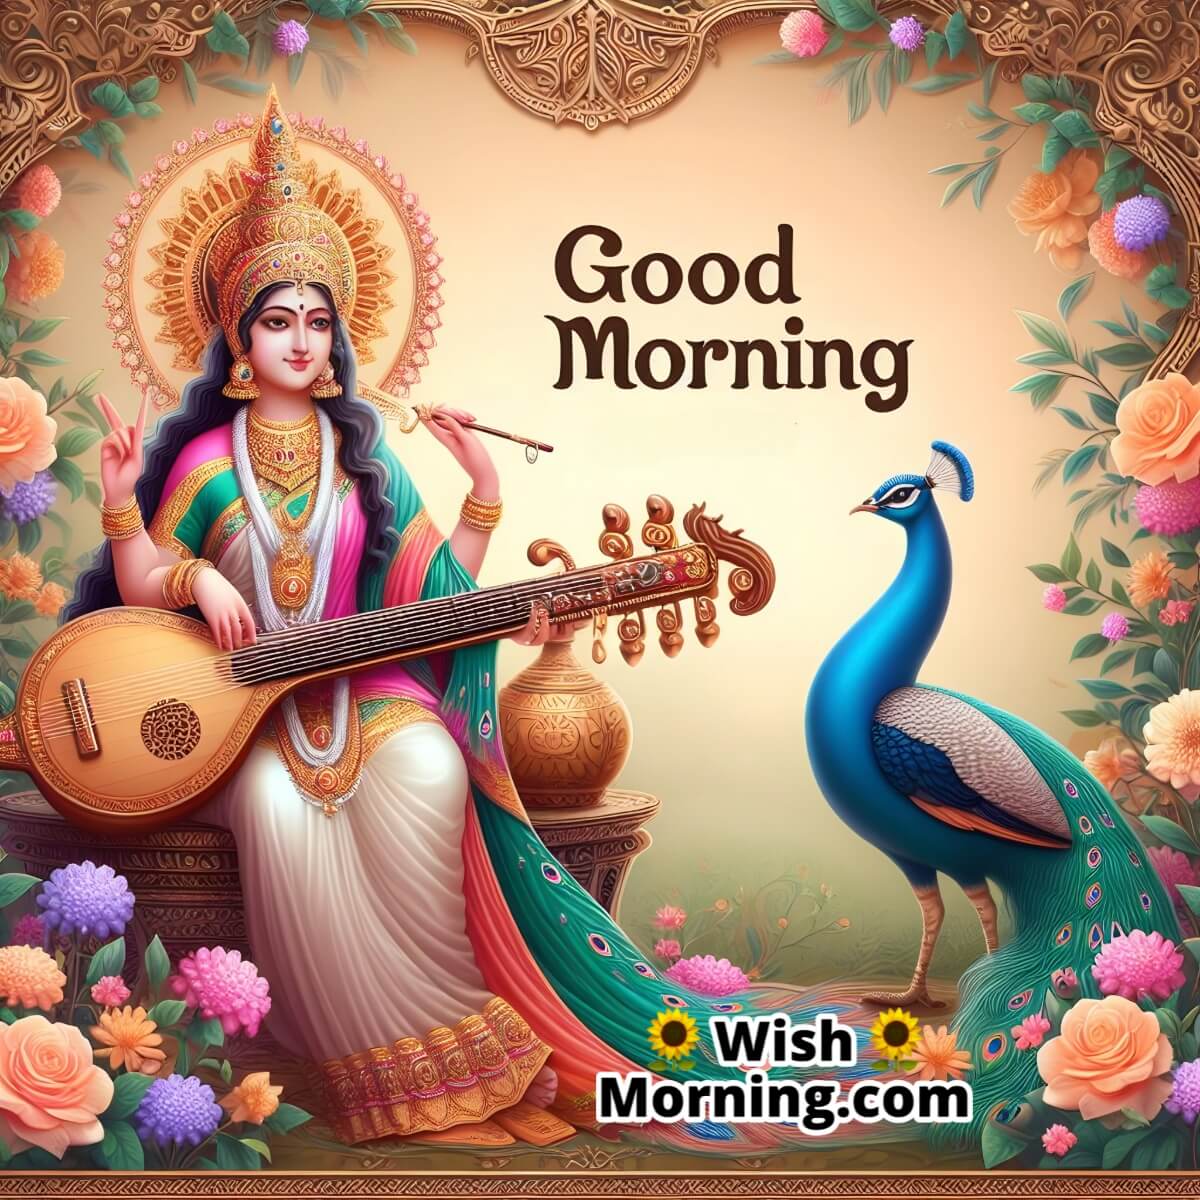 Blessed Morning With Saraswati Devi